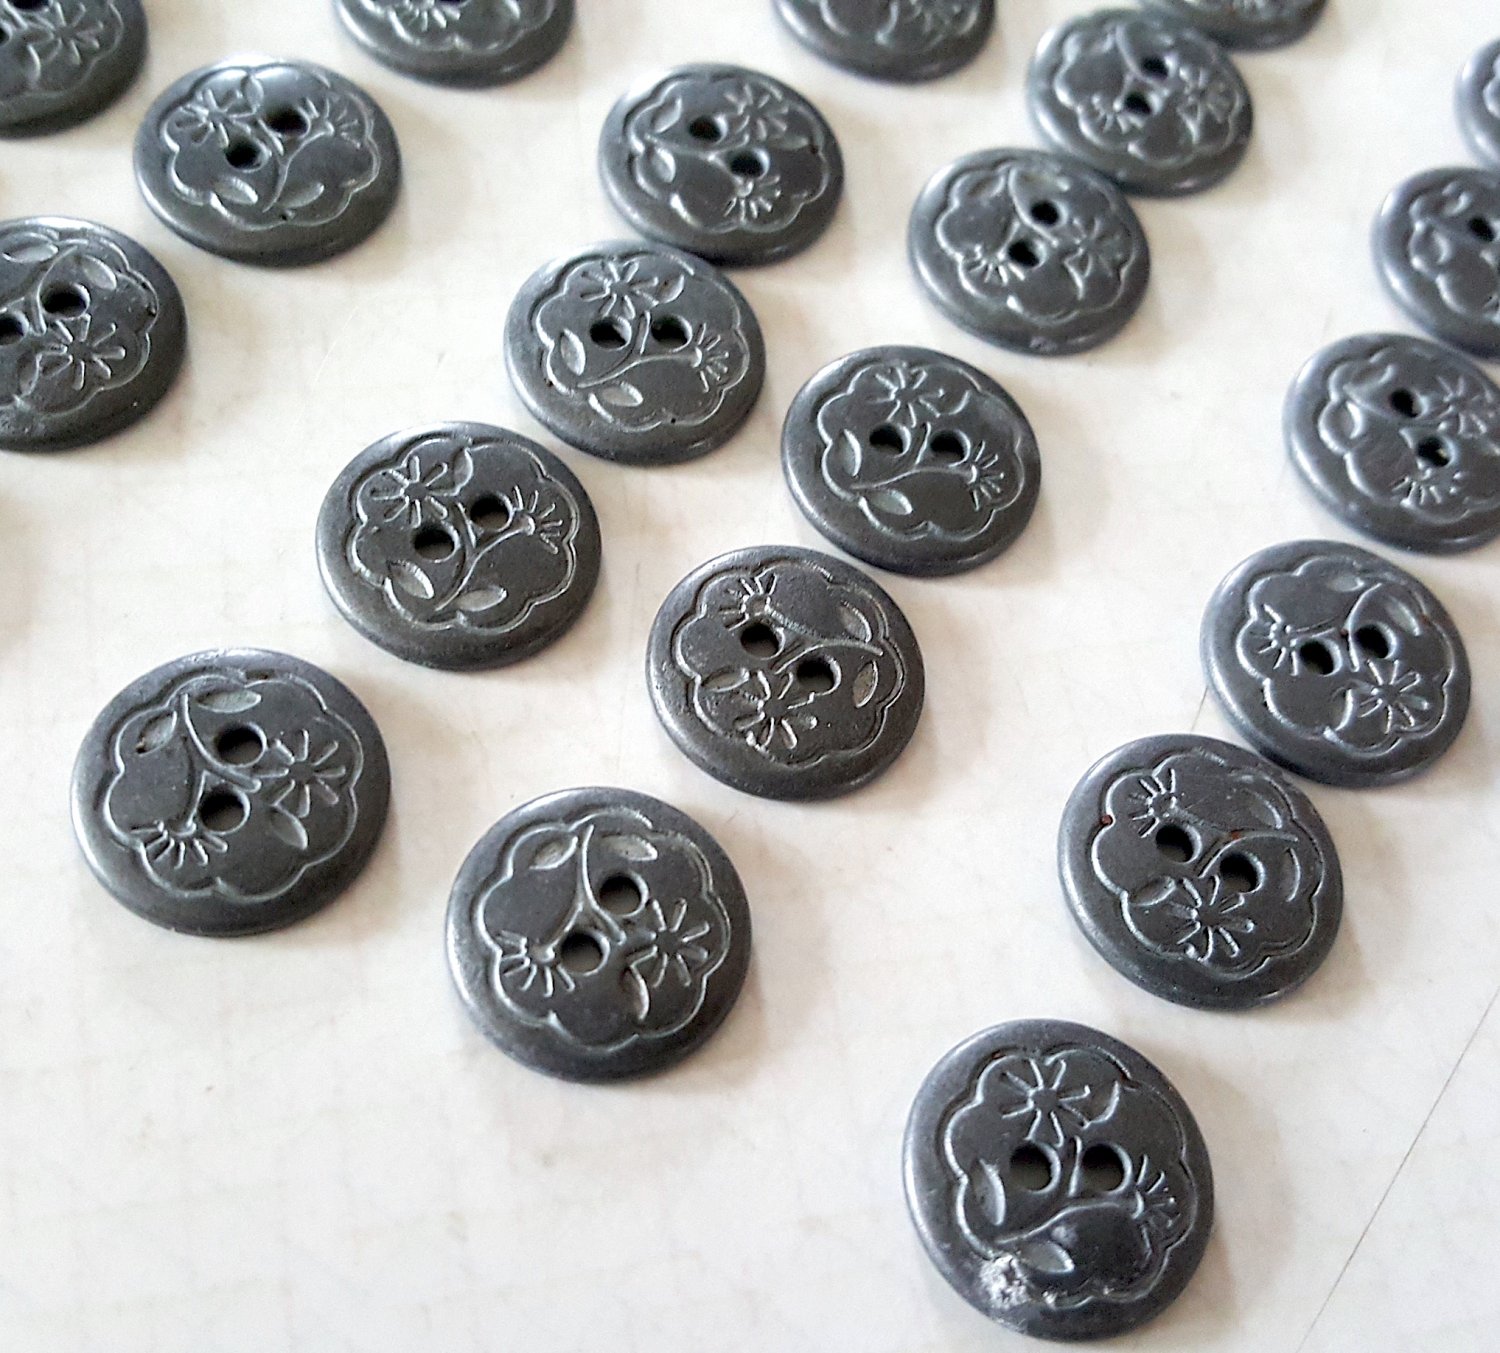 Vintage Floral Etched Design Non-magnetic Metal Buttons - 56 buttons